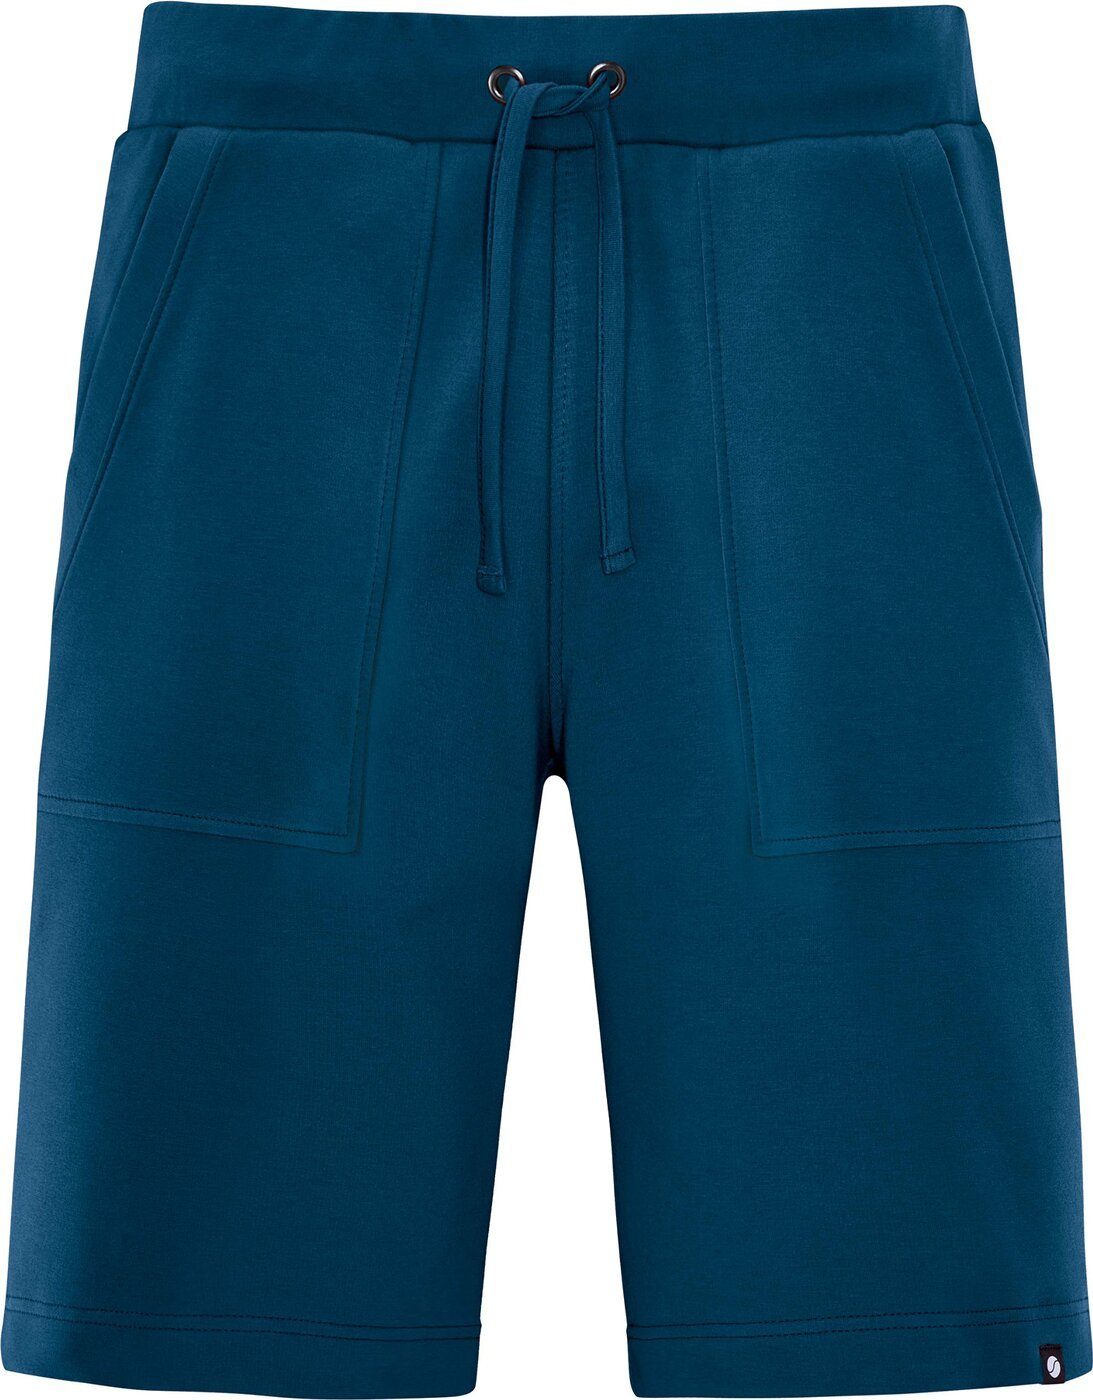 NAVARROM-SHORTS SCHNEIDER DEEPPETROLEUM Shorts Sportswear